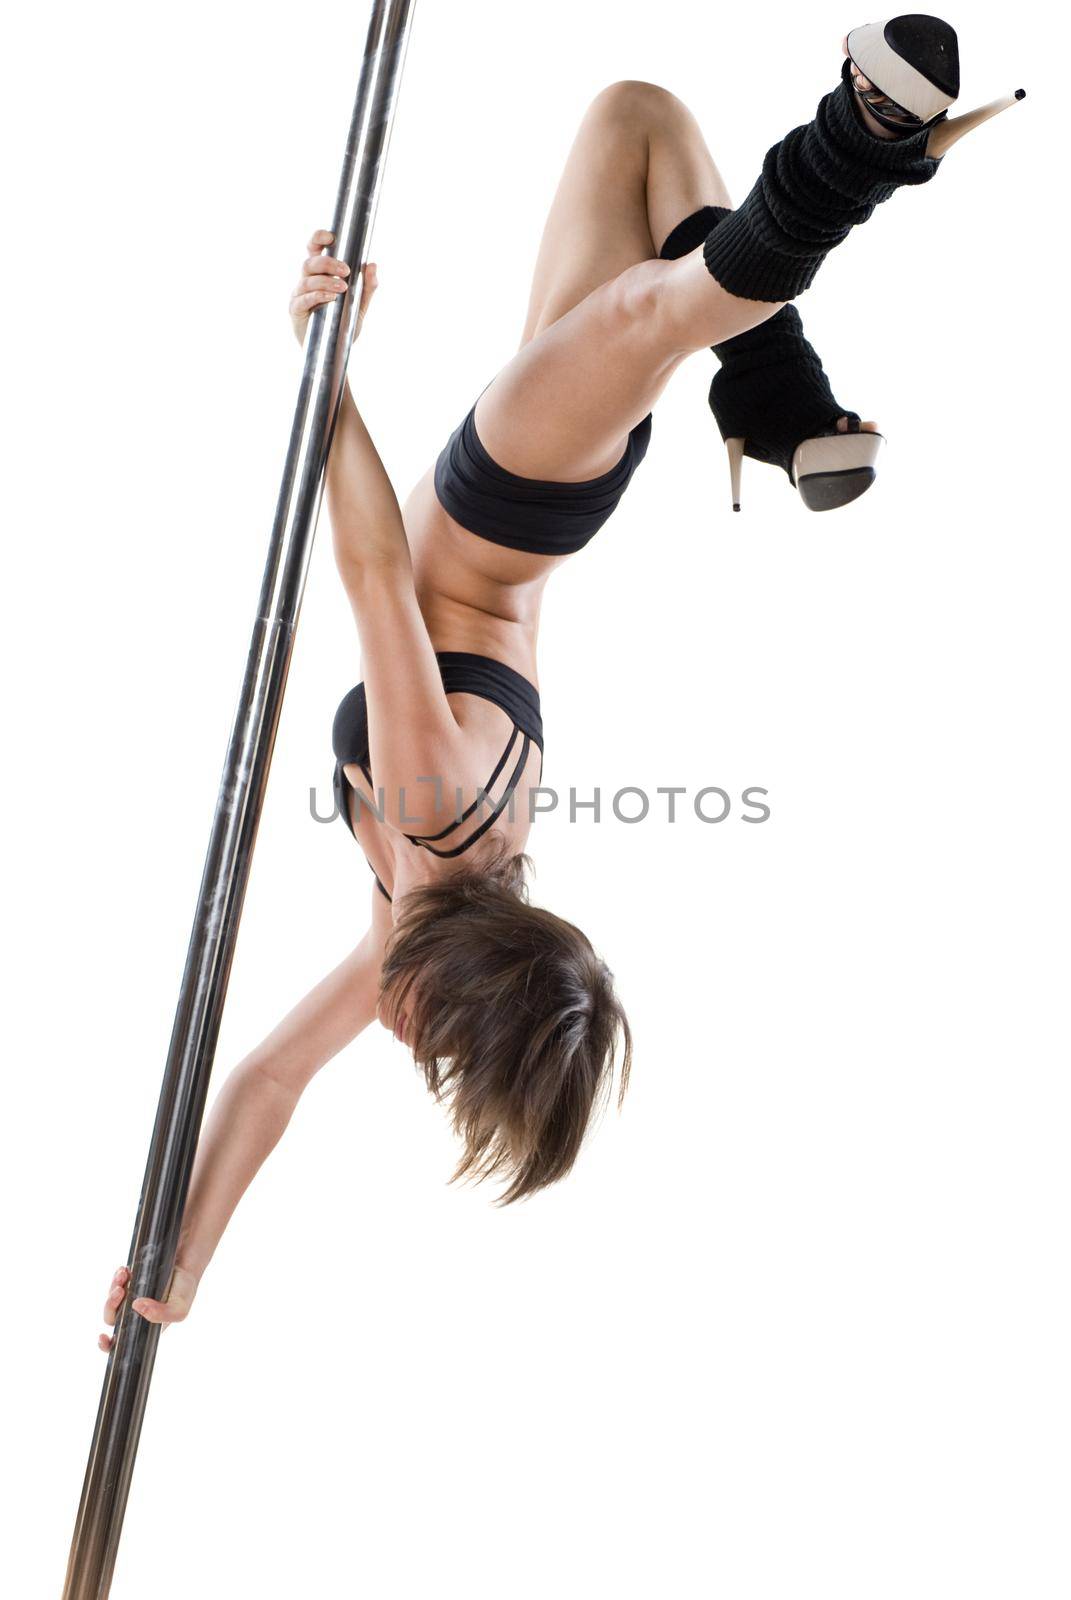 Young sexy pole dance woman by Julenochek